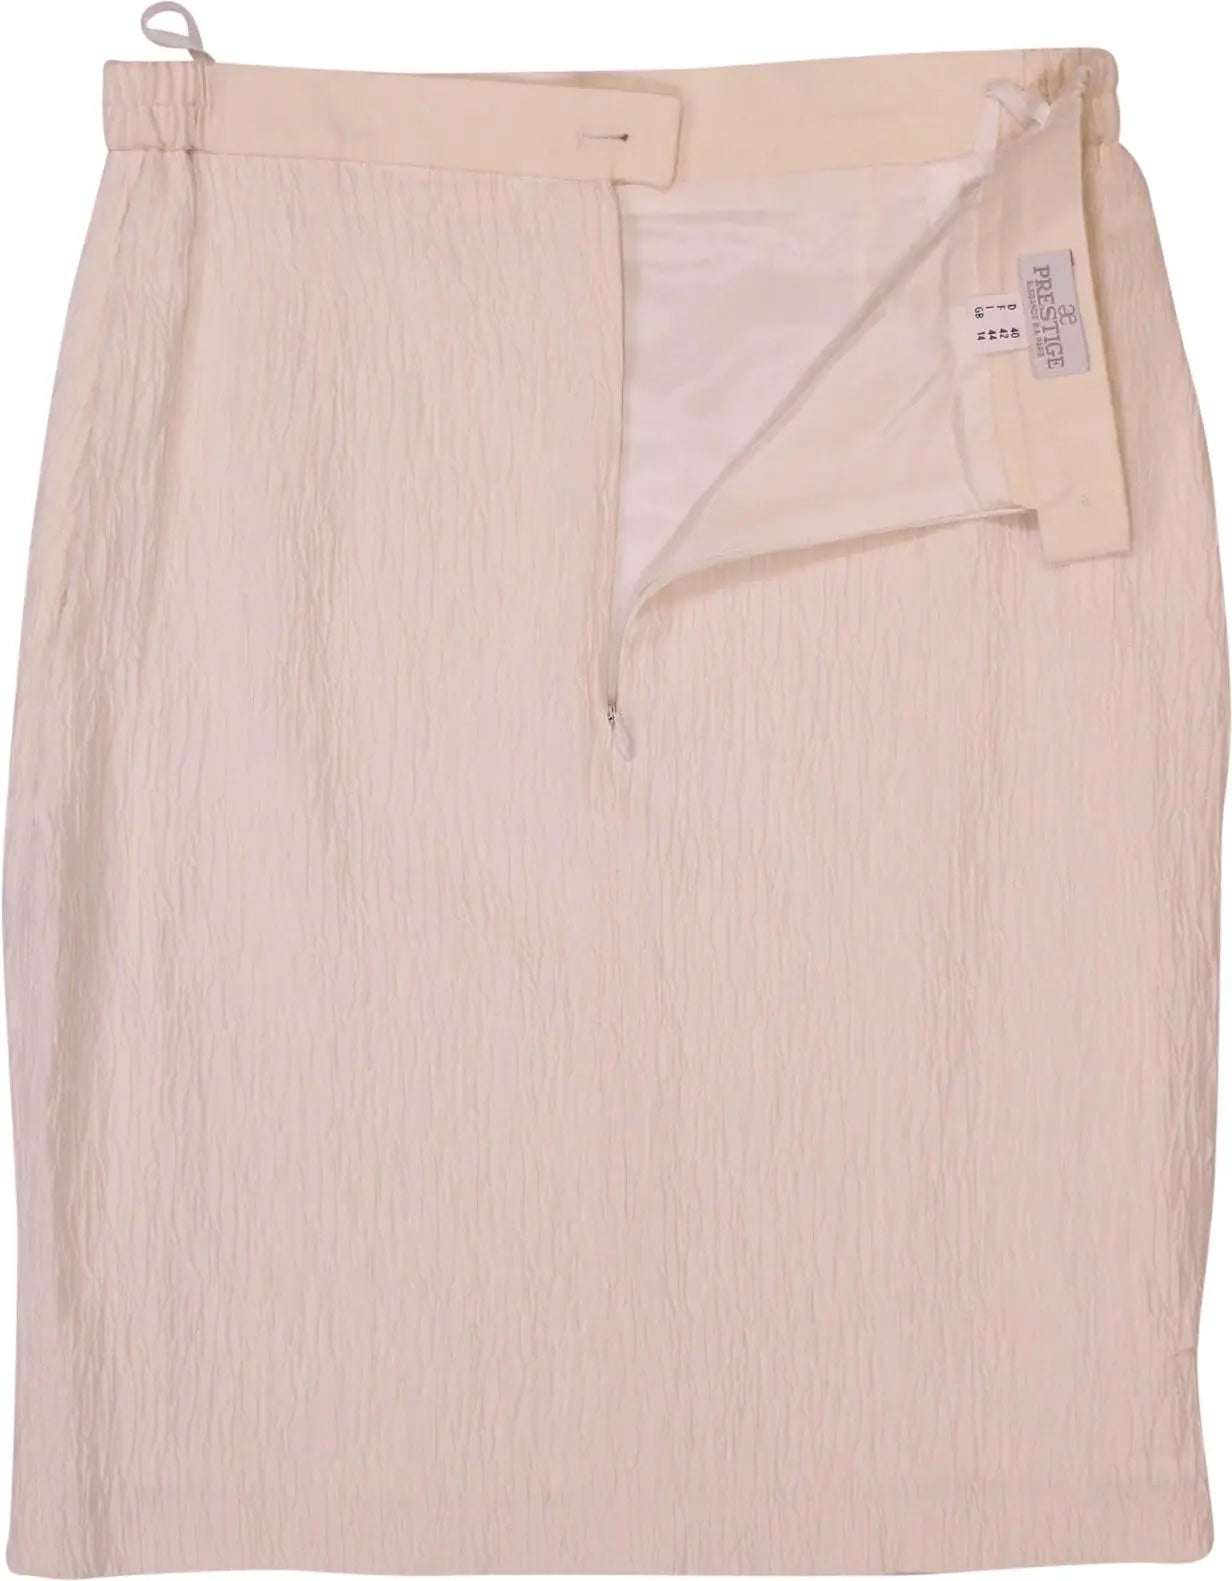 Prestige - 90s Crinkled Pencil Skirt- ThriftTale.com - Vintage and second handclothing